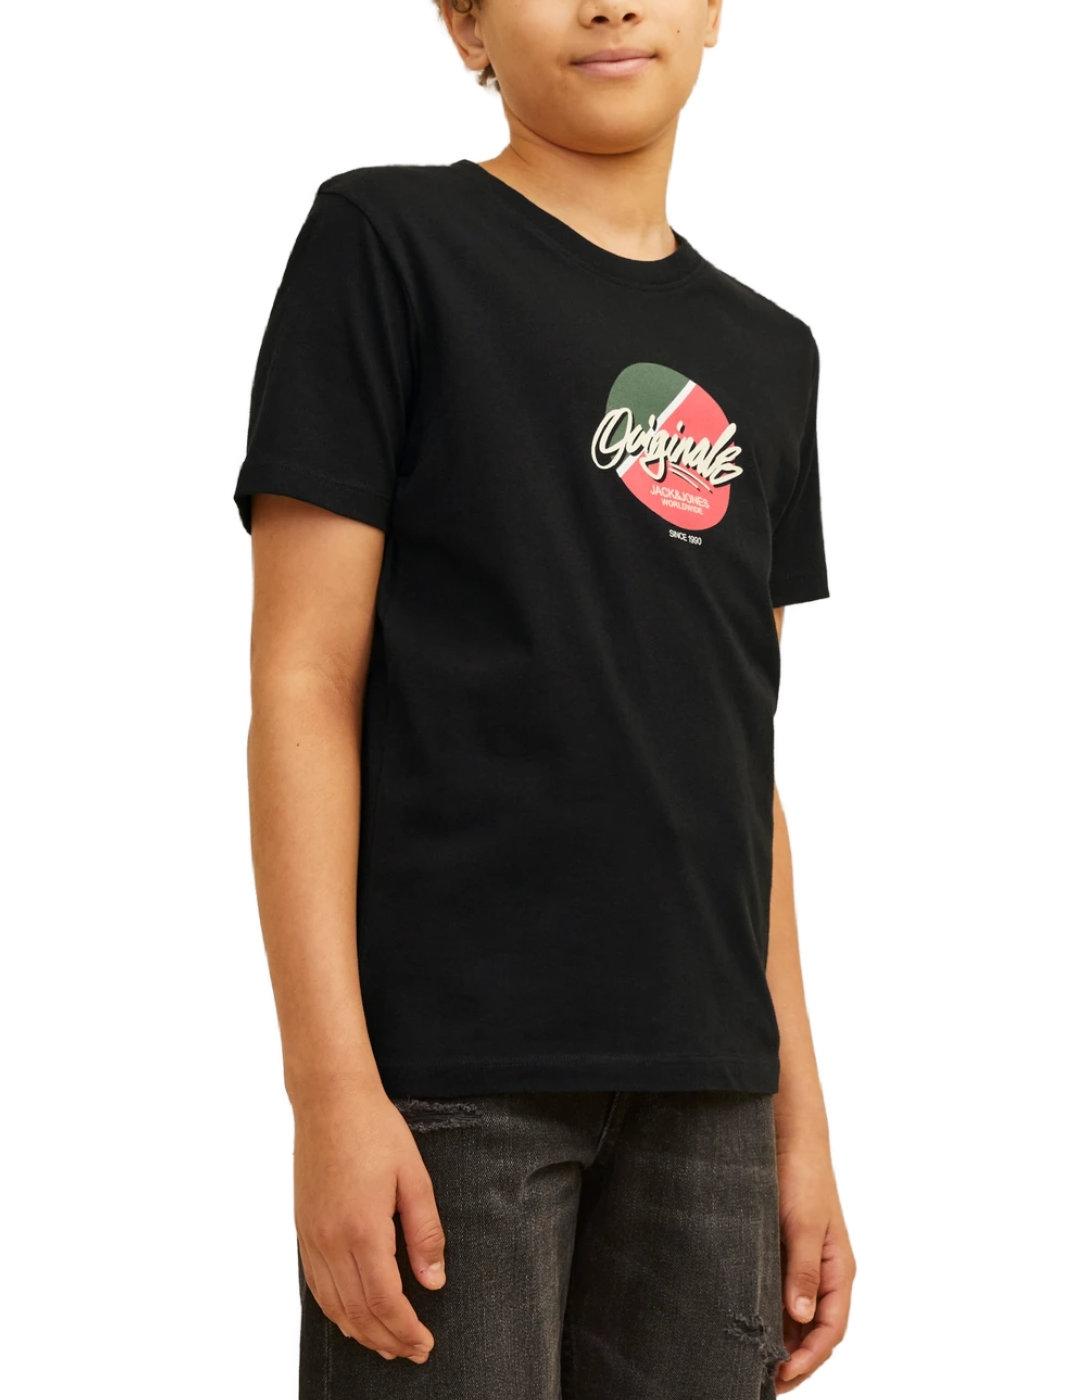 Camiseta Jack&Jones Junior Tampa negro manga corta niño